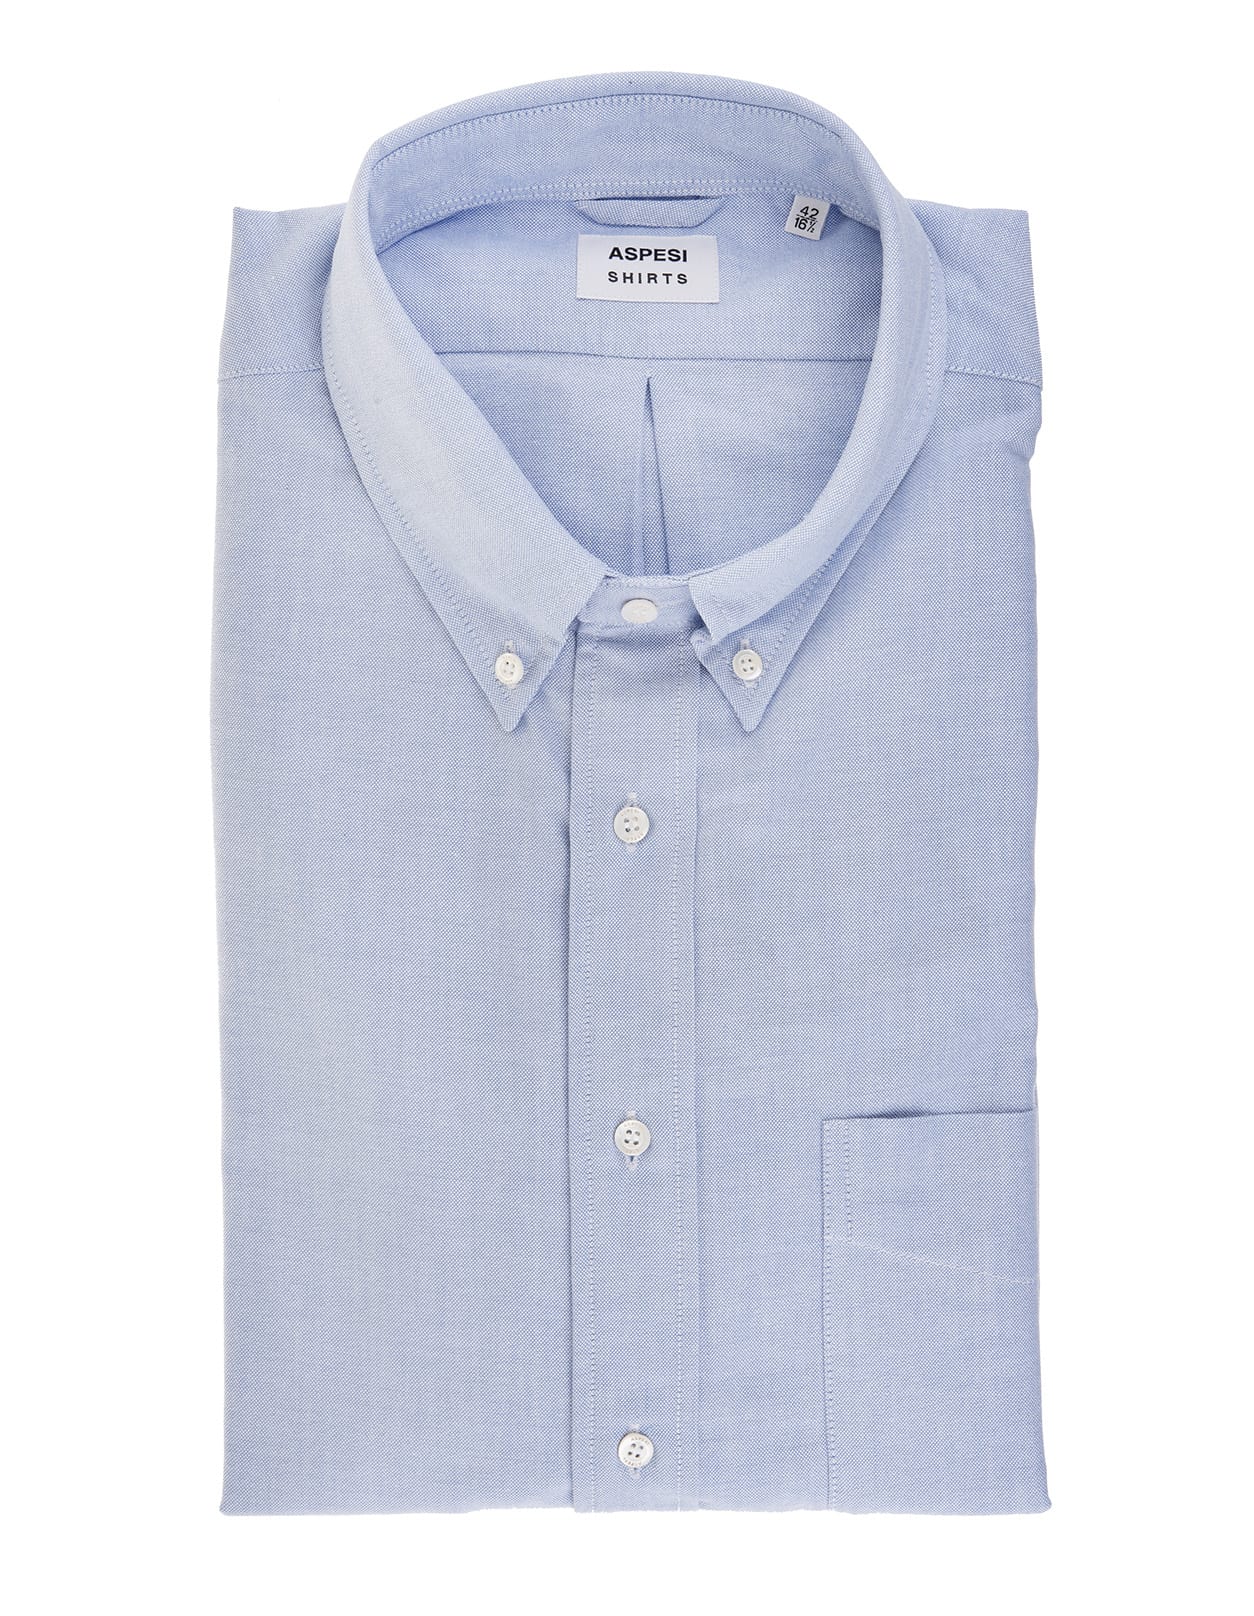 Aspesi Man Light Blue Cotton Oxford Shirt